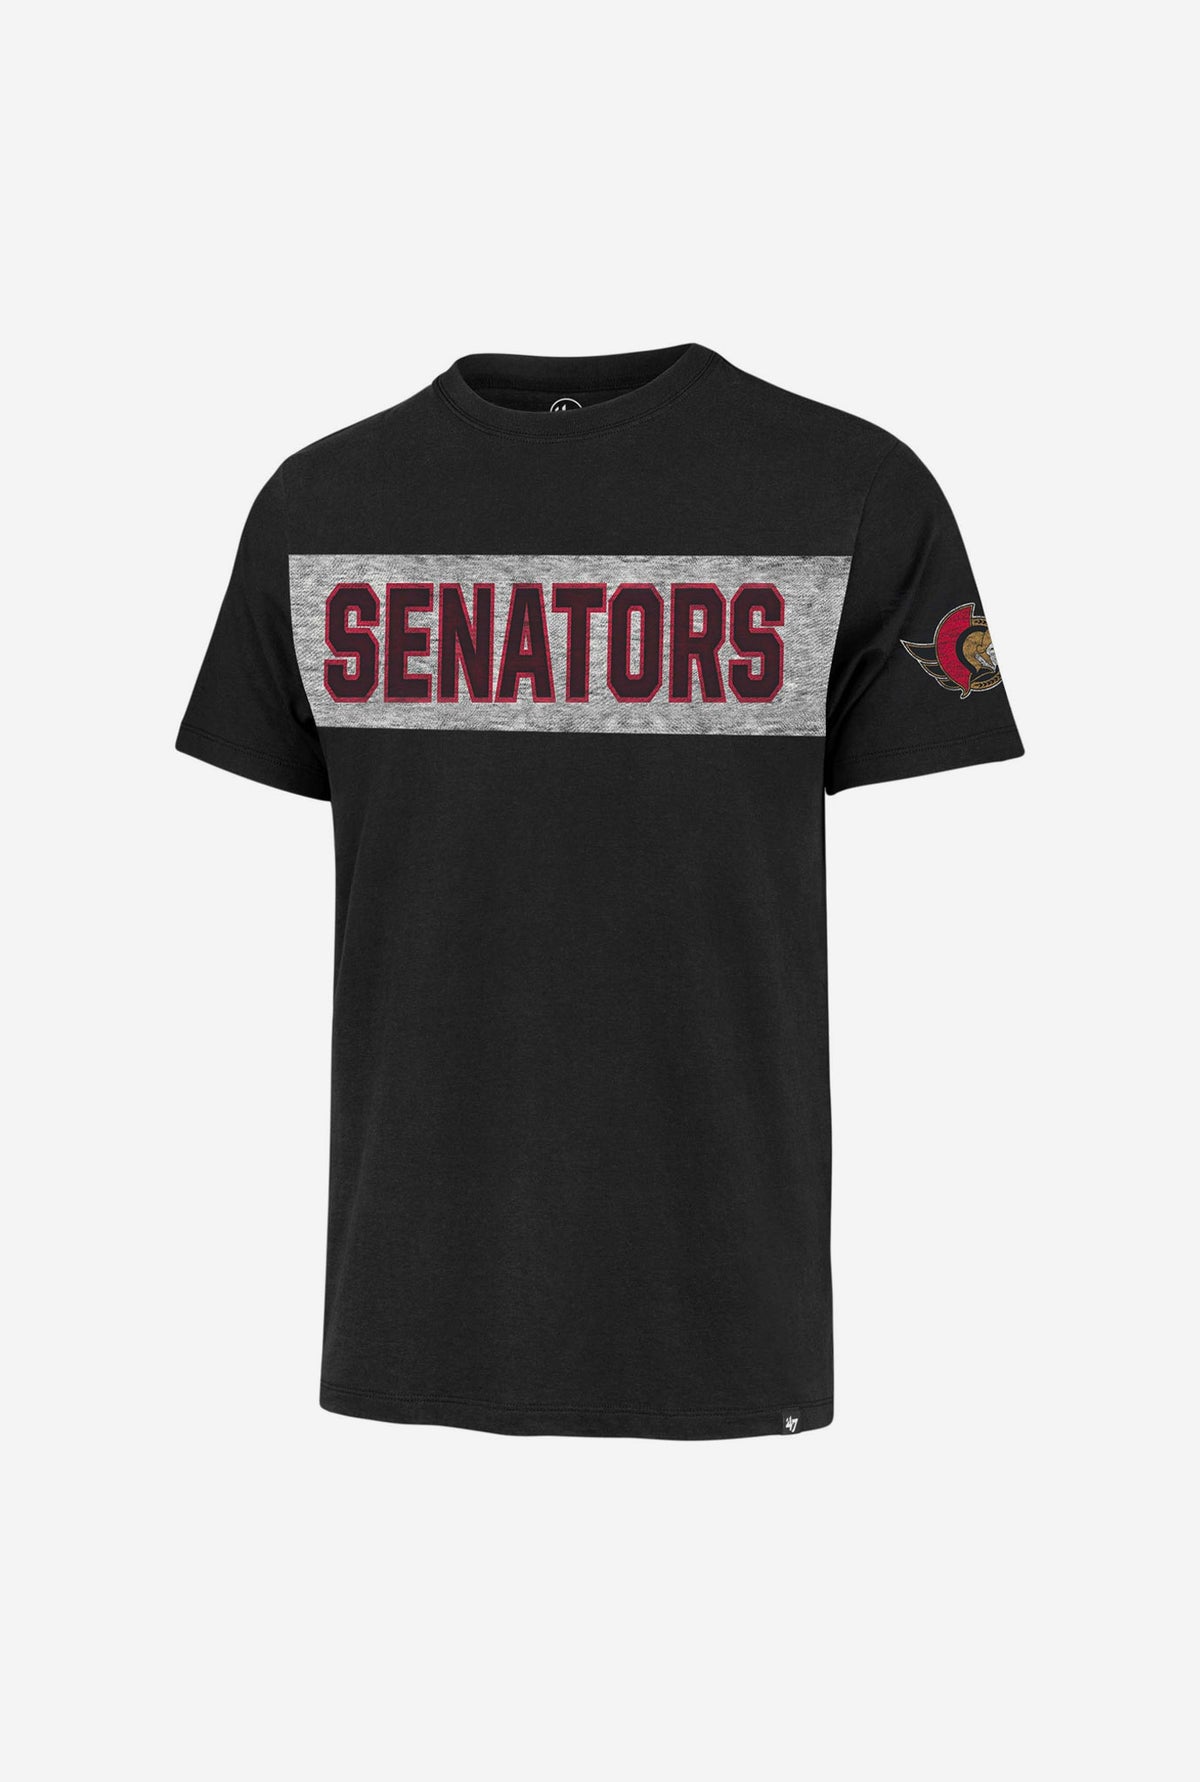 Ottawa Senators Top Shelf Franklin T-Shirt